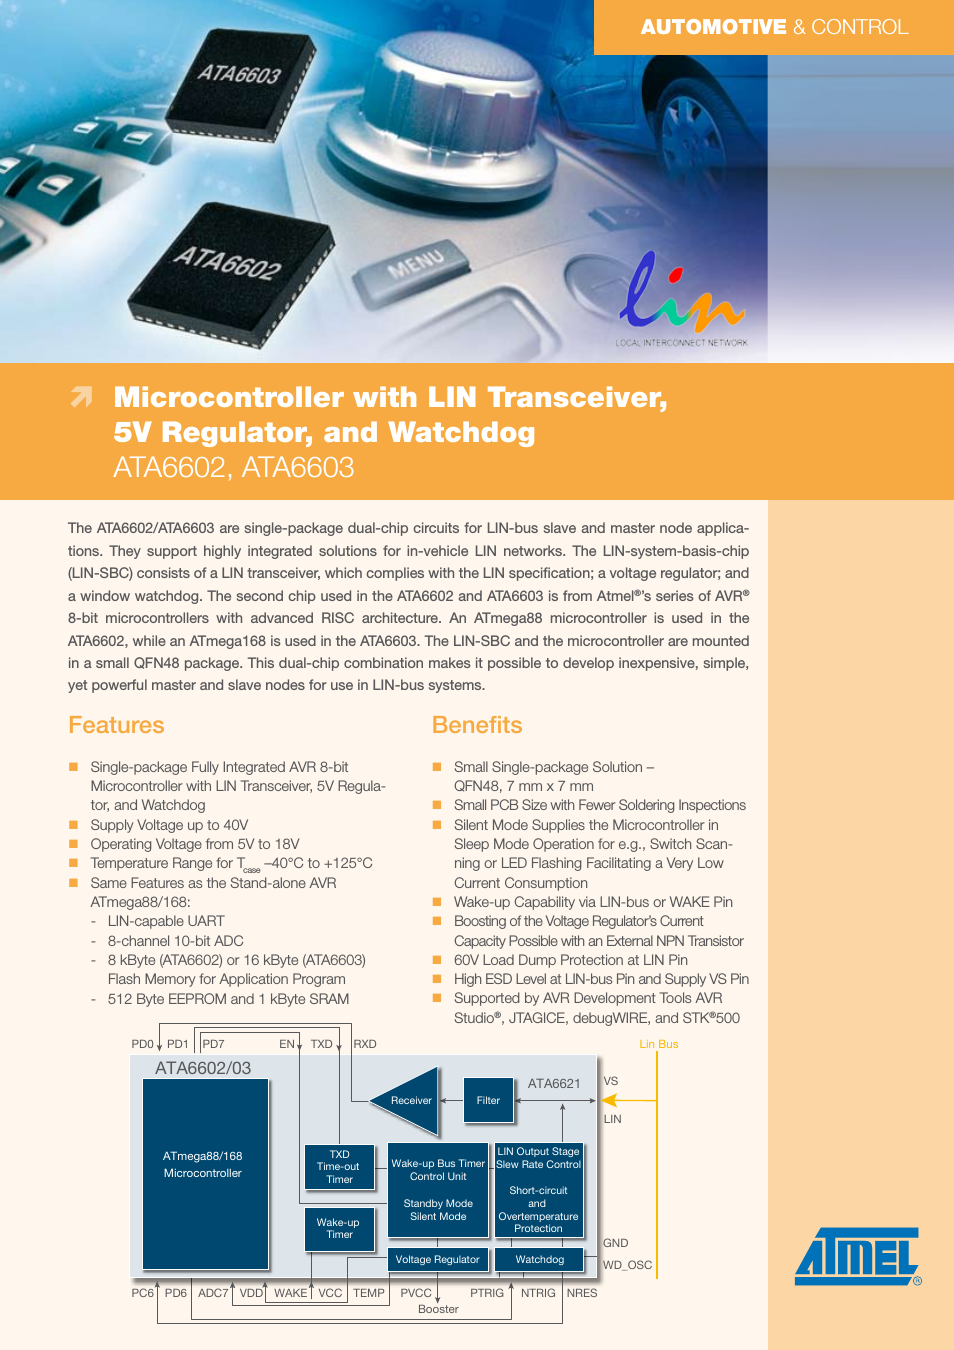 Microcontroller with LIN Transceiver ATA6602